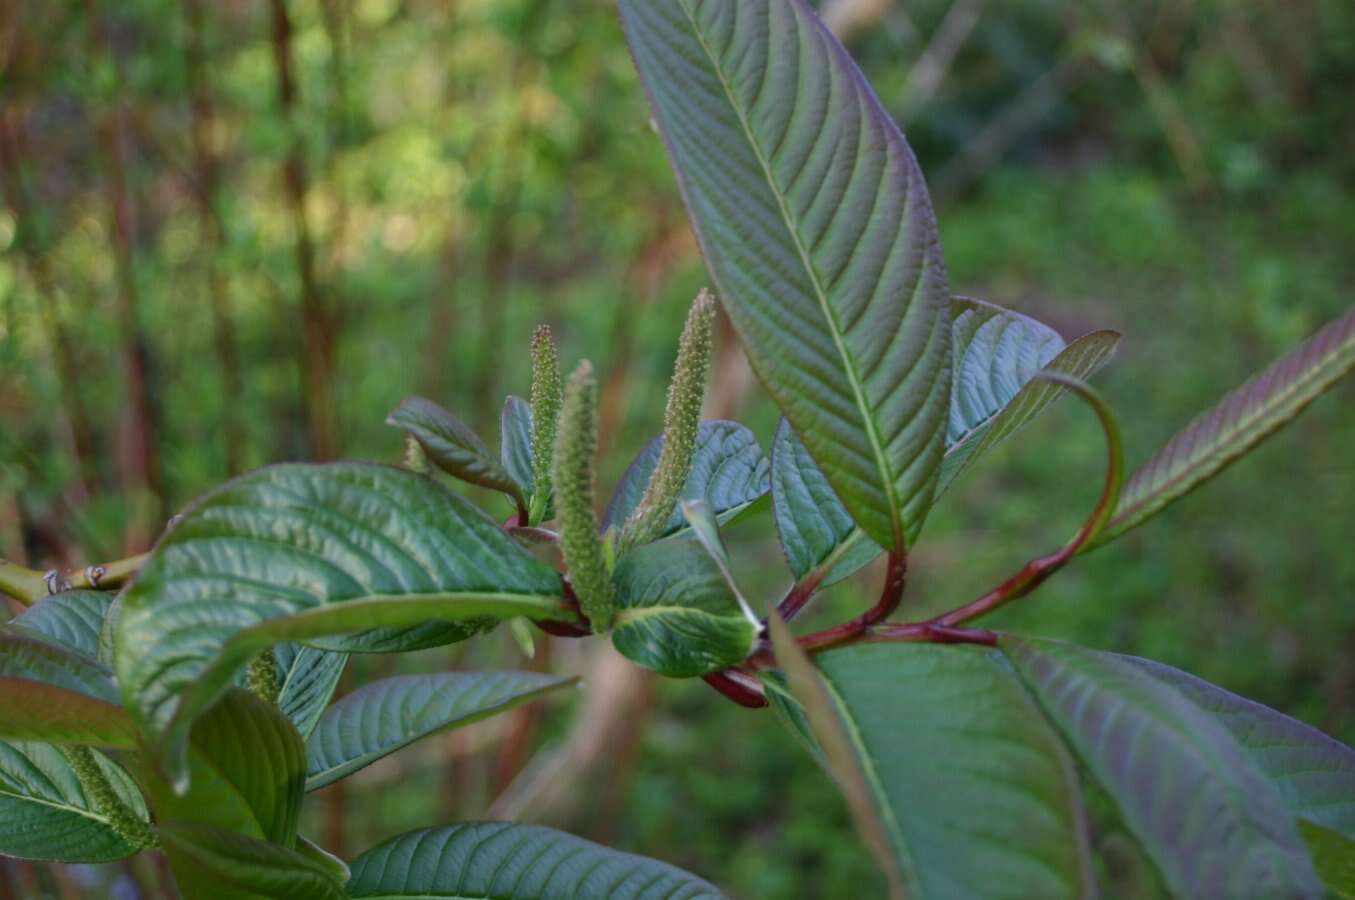 Image of Salix moupinensis Franch.